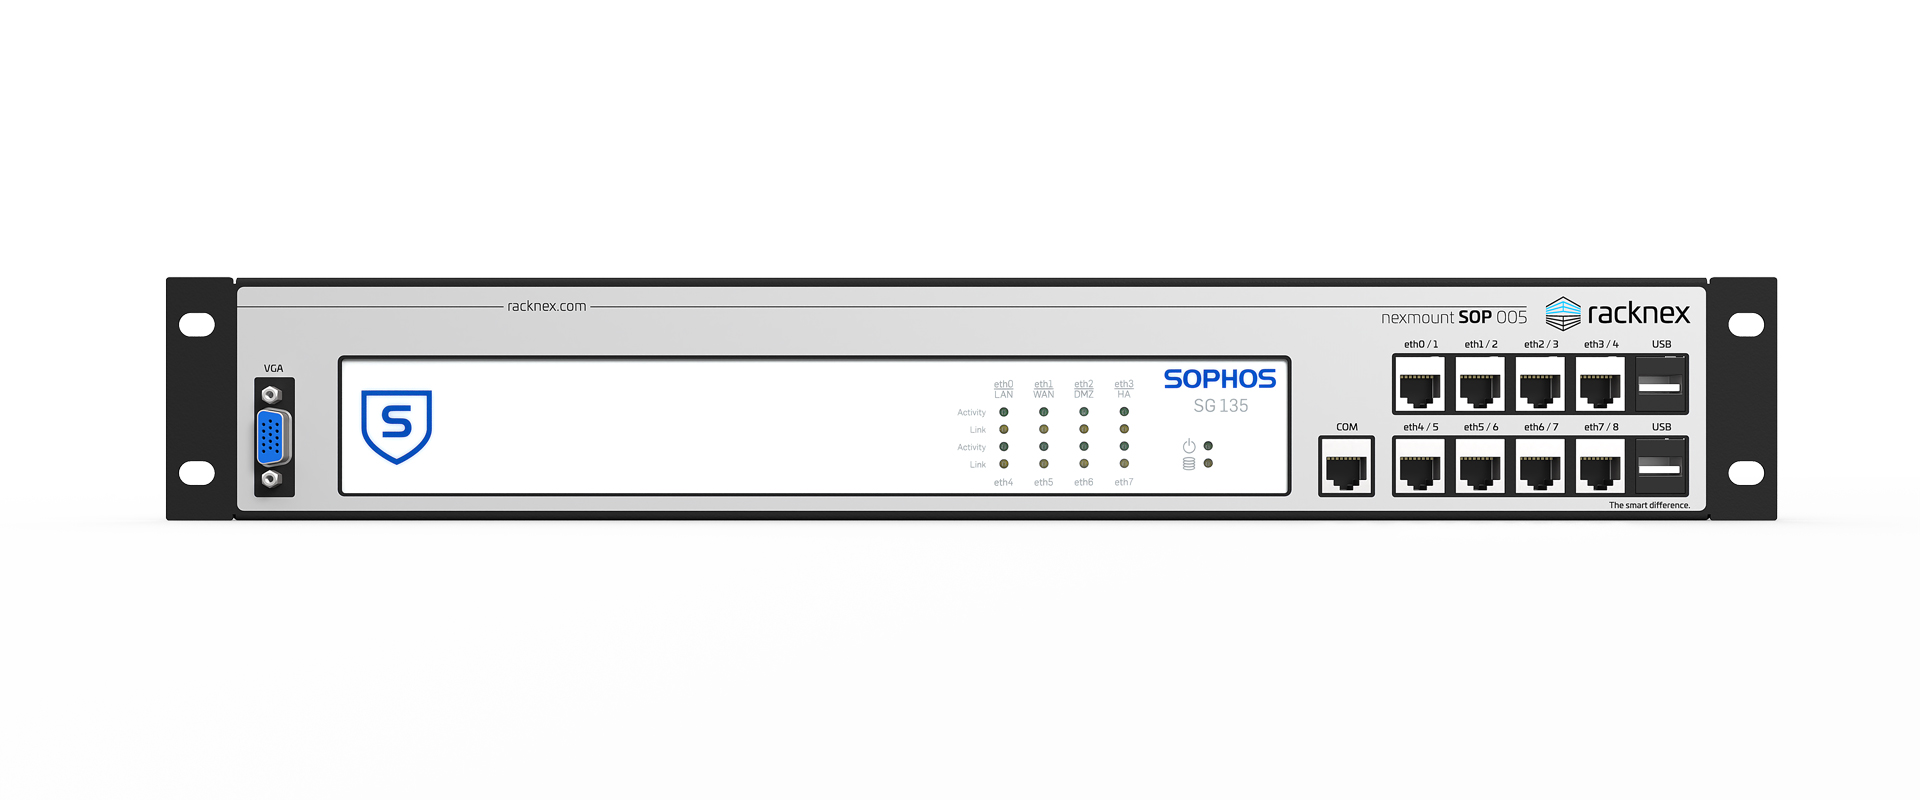 Sophos XG 125 Rev.2 rack mount - NM-SOP-005